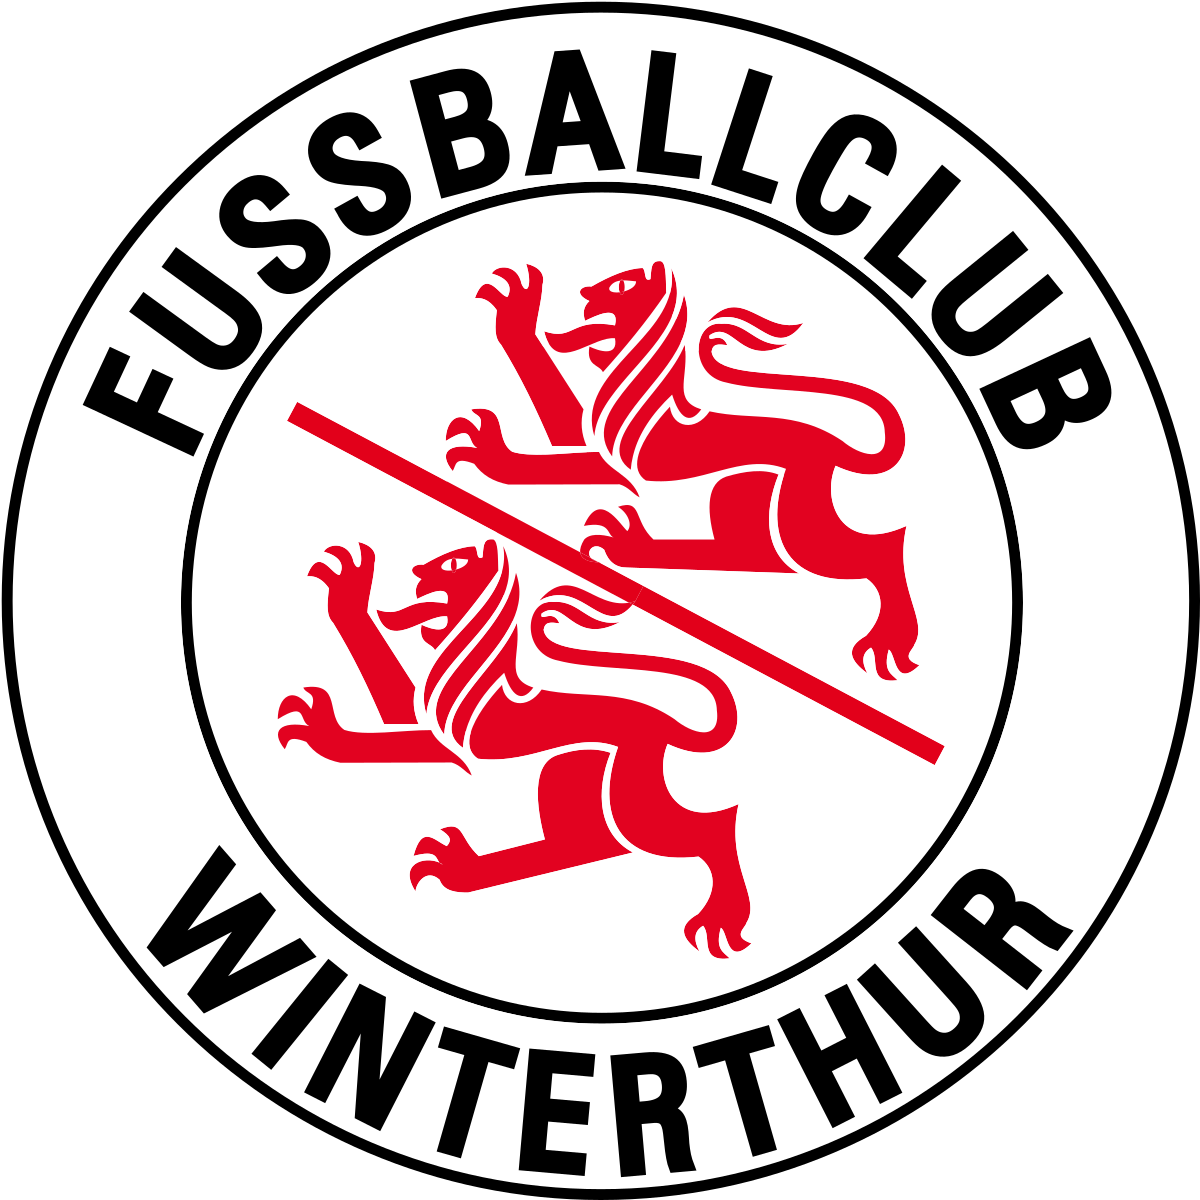 Basel vs Winterthur Prediction: Basel to roar back